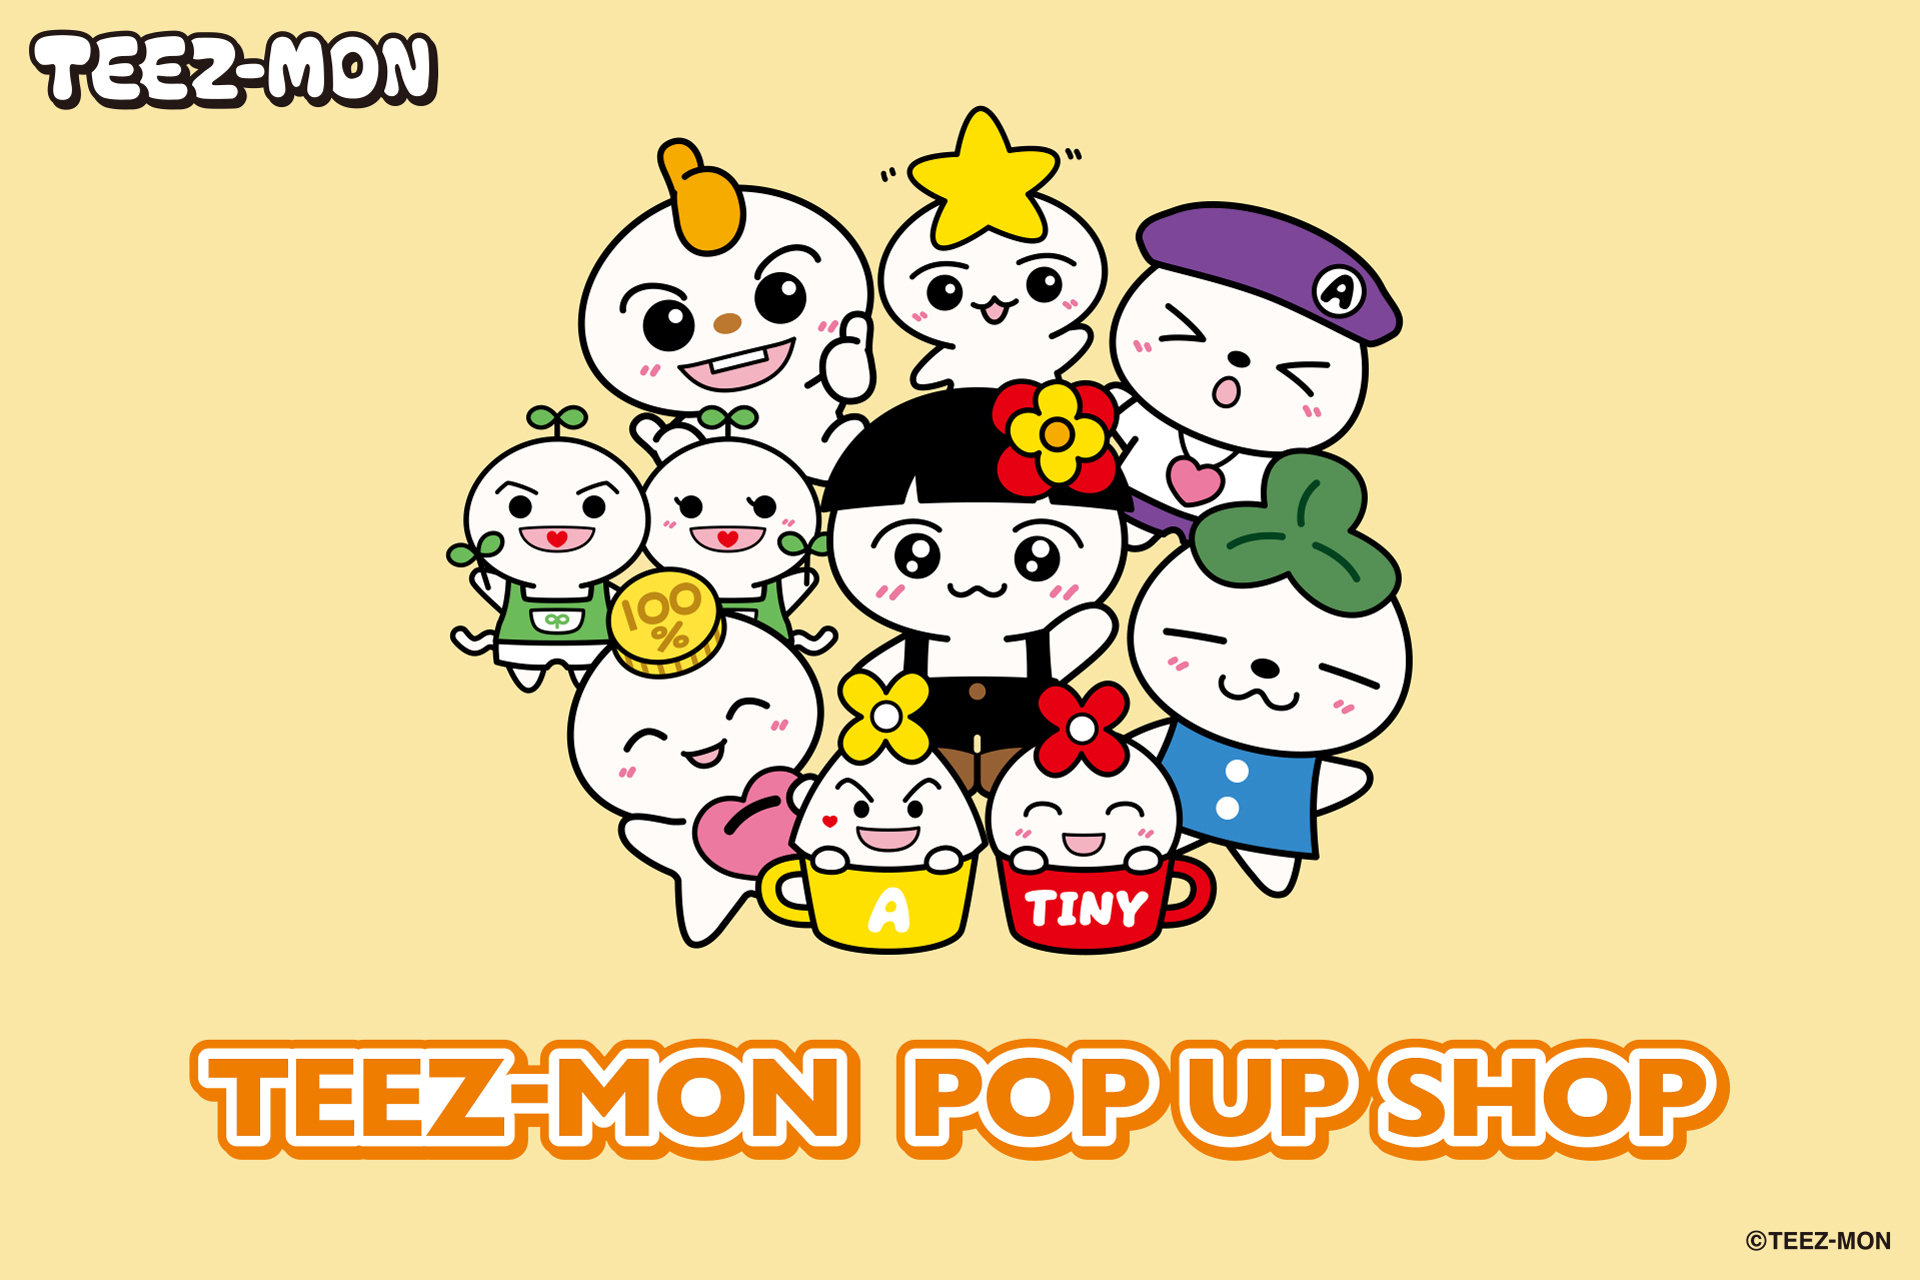 TEEZ-MON POP UP SHOP』がSHIBUYA109渋谷店、阿倍野店で開催決定 